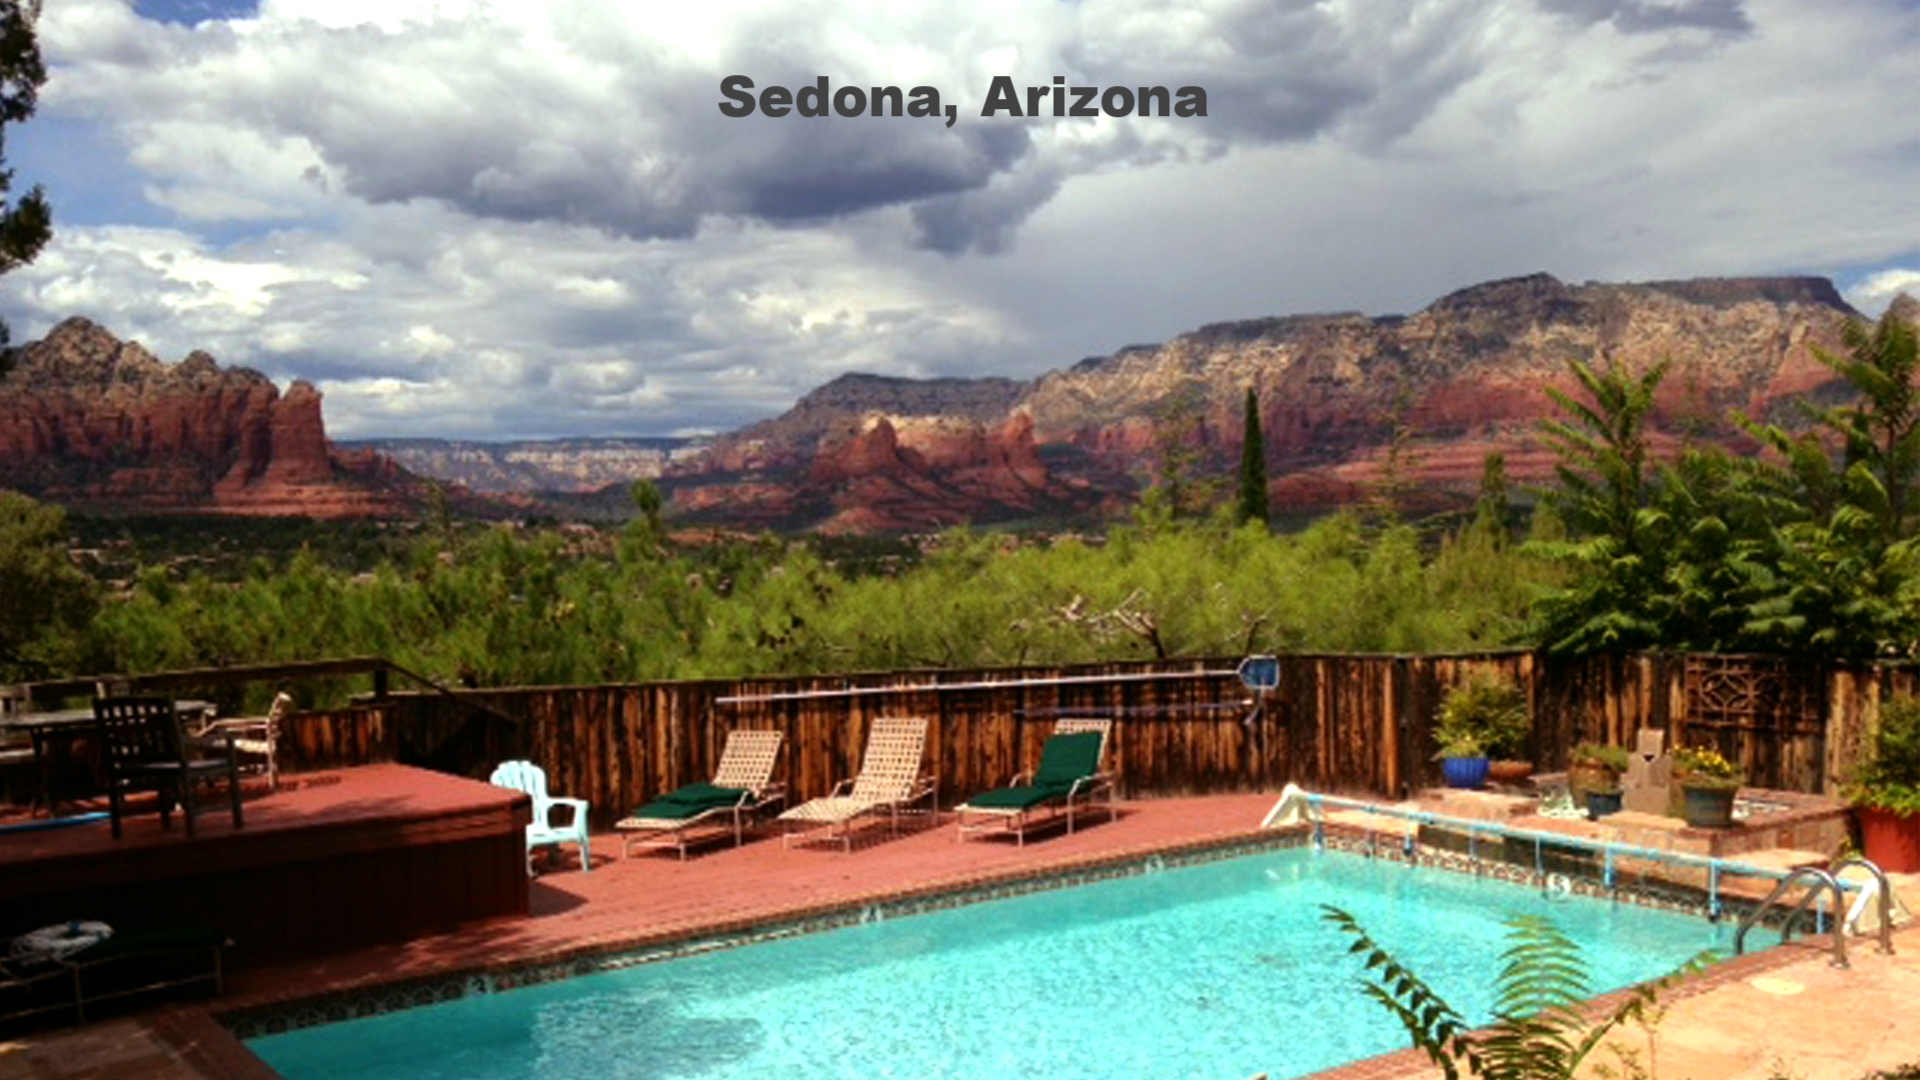 Sedona, Arizona.jpg